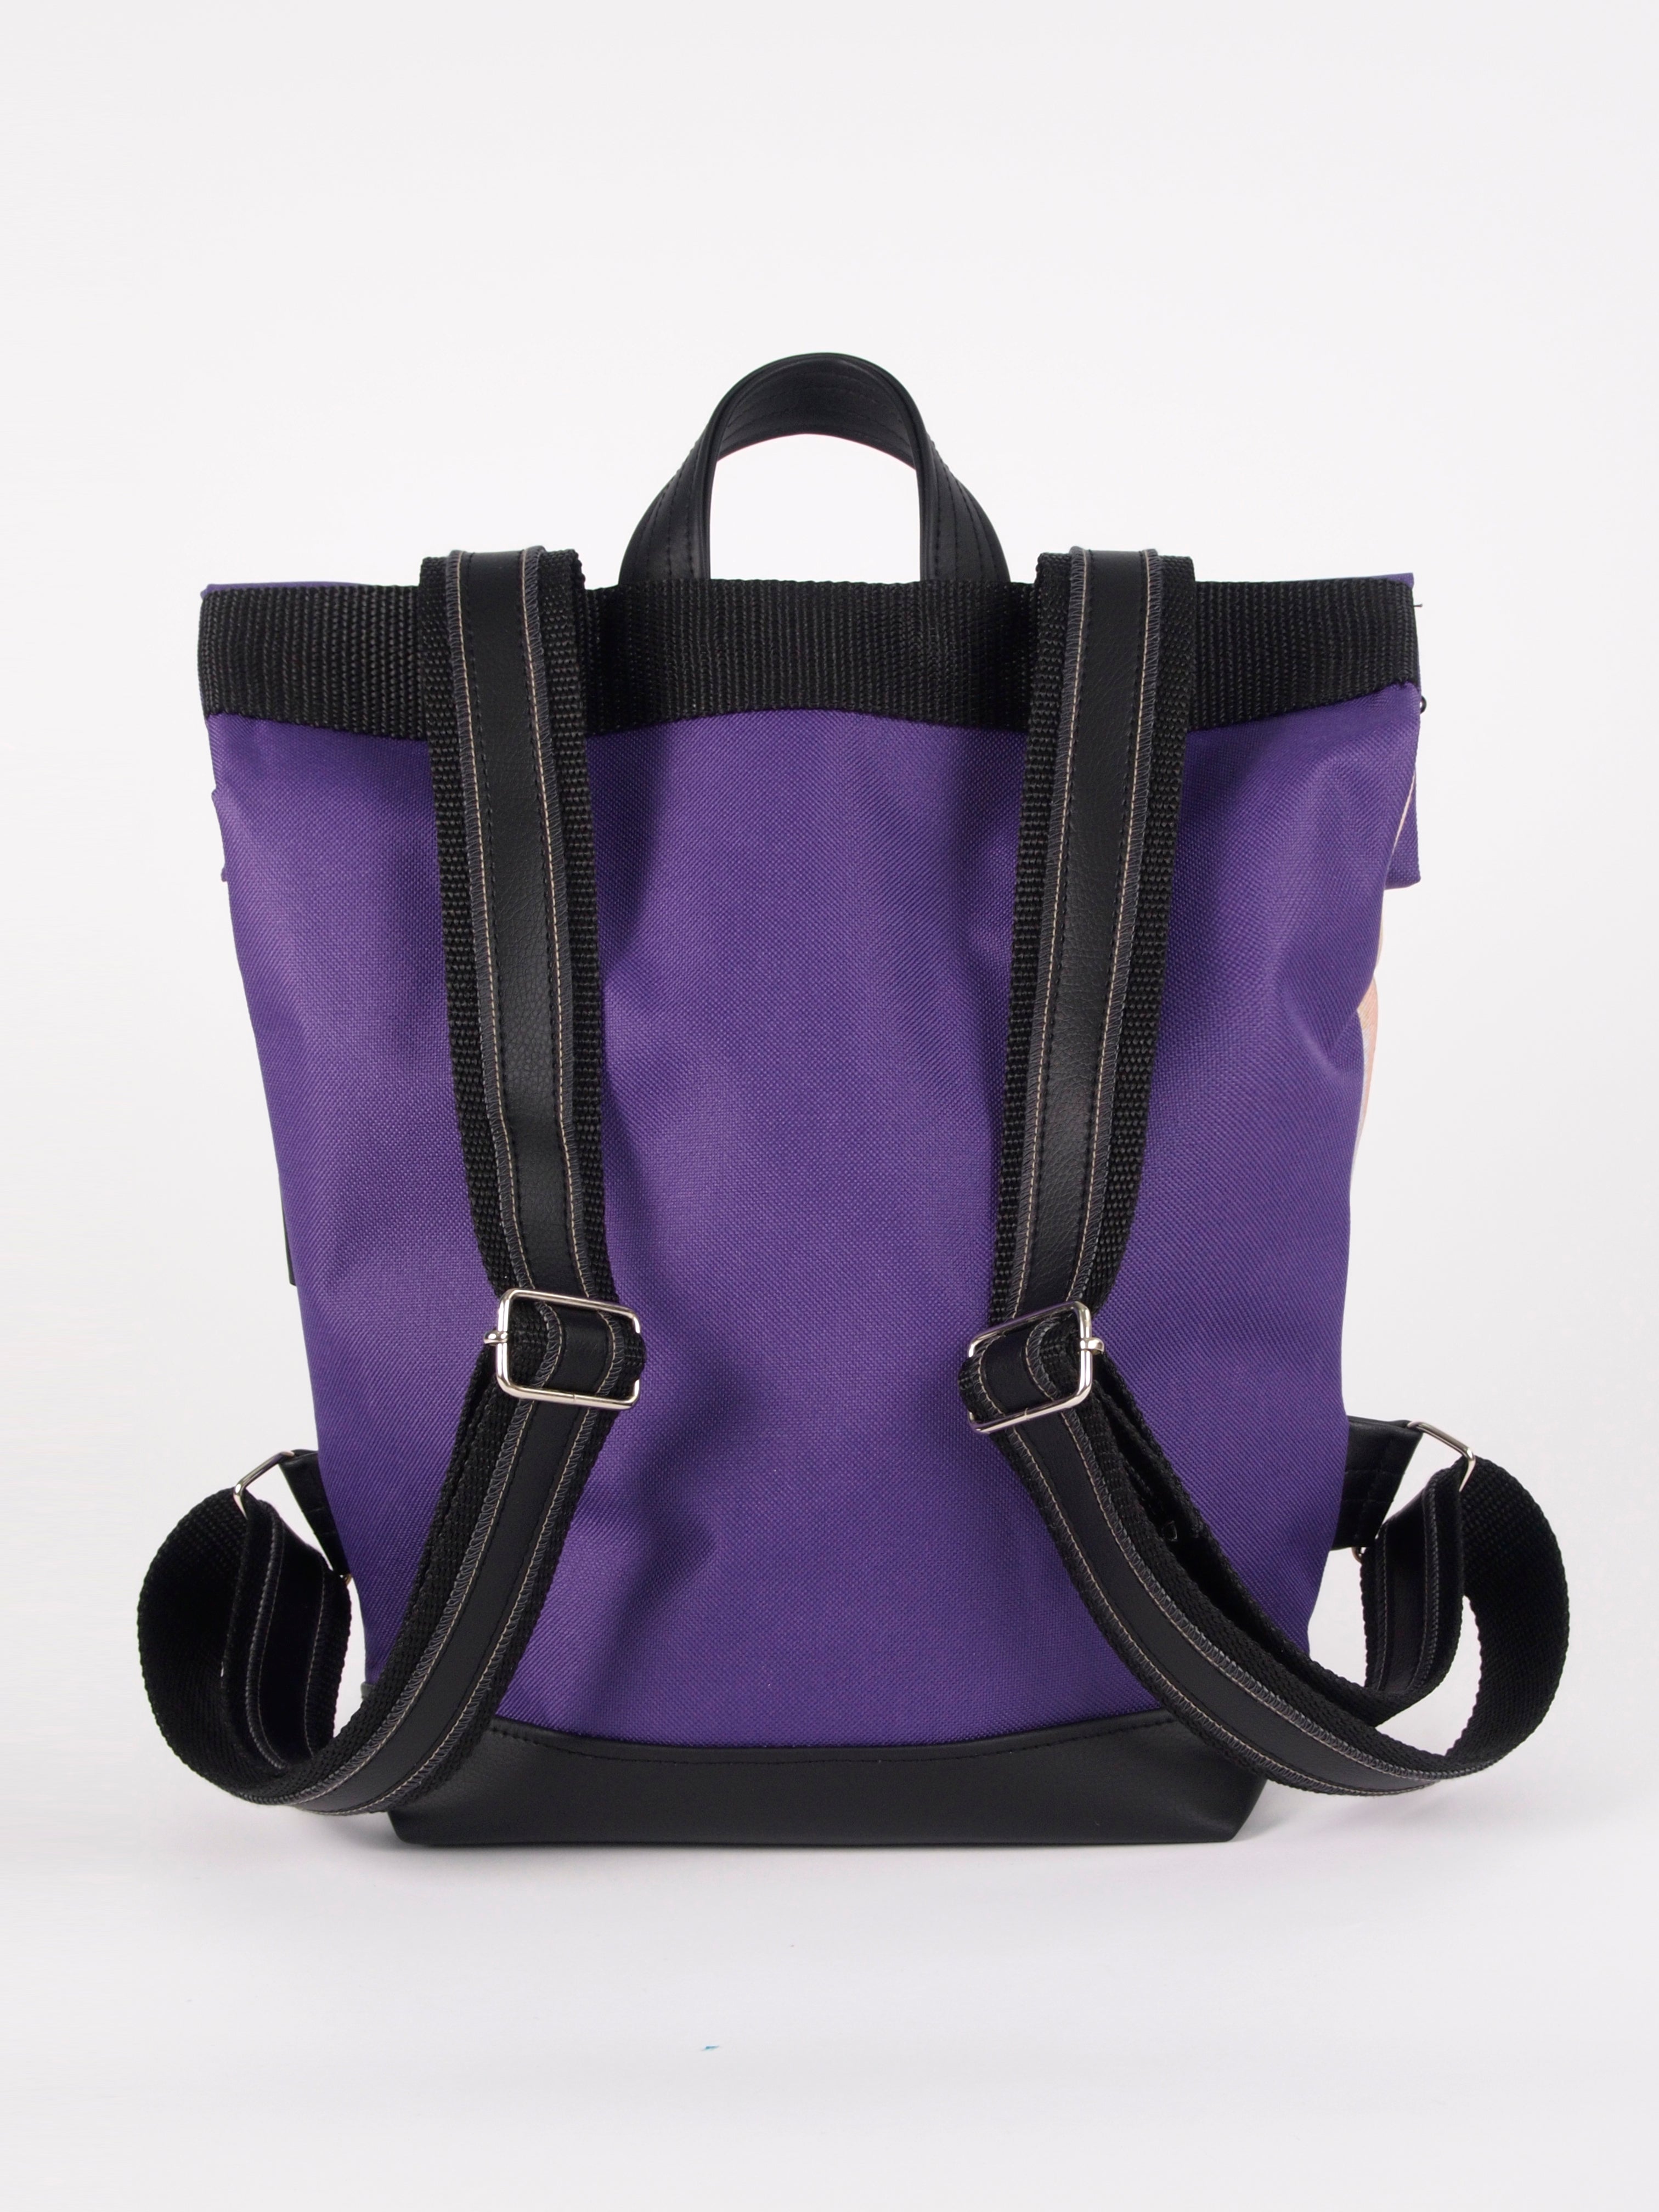 Bardo roll backpack - Garden - Premium Bardo backpack from BARDO ART WORKS - Just lvabstract, art, backpack, black, dance, dark blue, gift, handemade, jazz, orange, purple, red, tablet, urban style, vegan leather, woman85.00! Shop now at BARDO ART WORKS